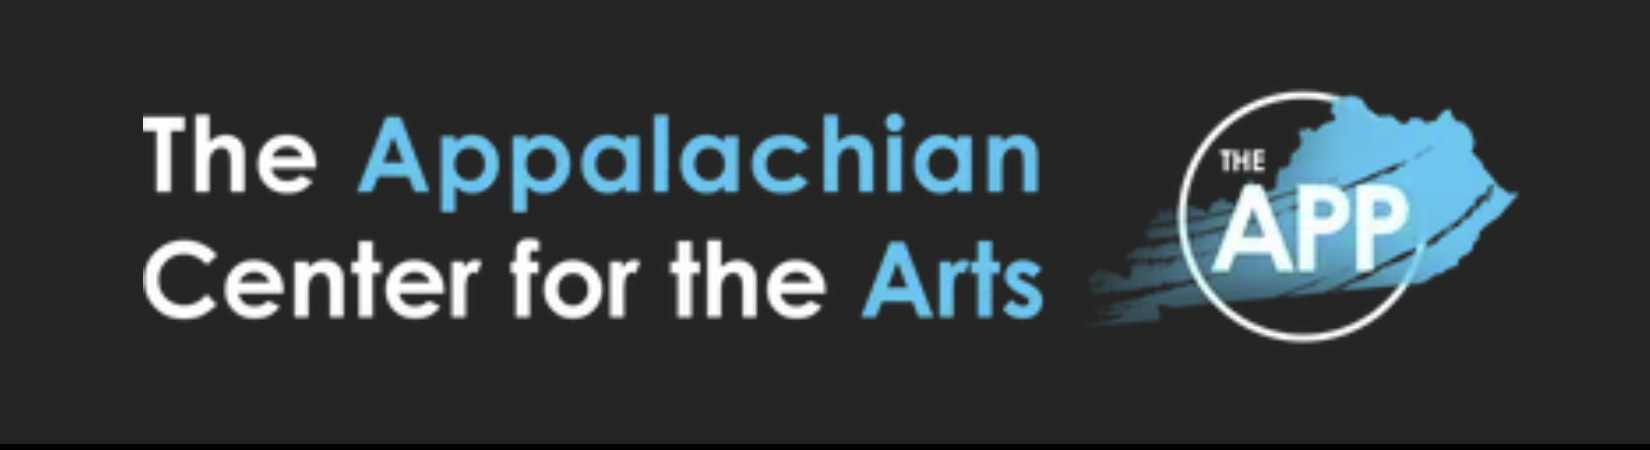 The Appalachian Center for the Arts logo